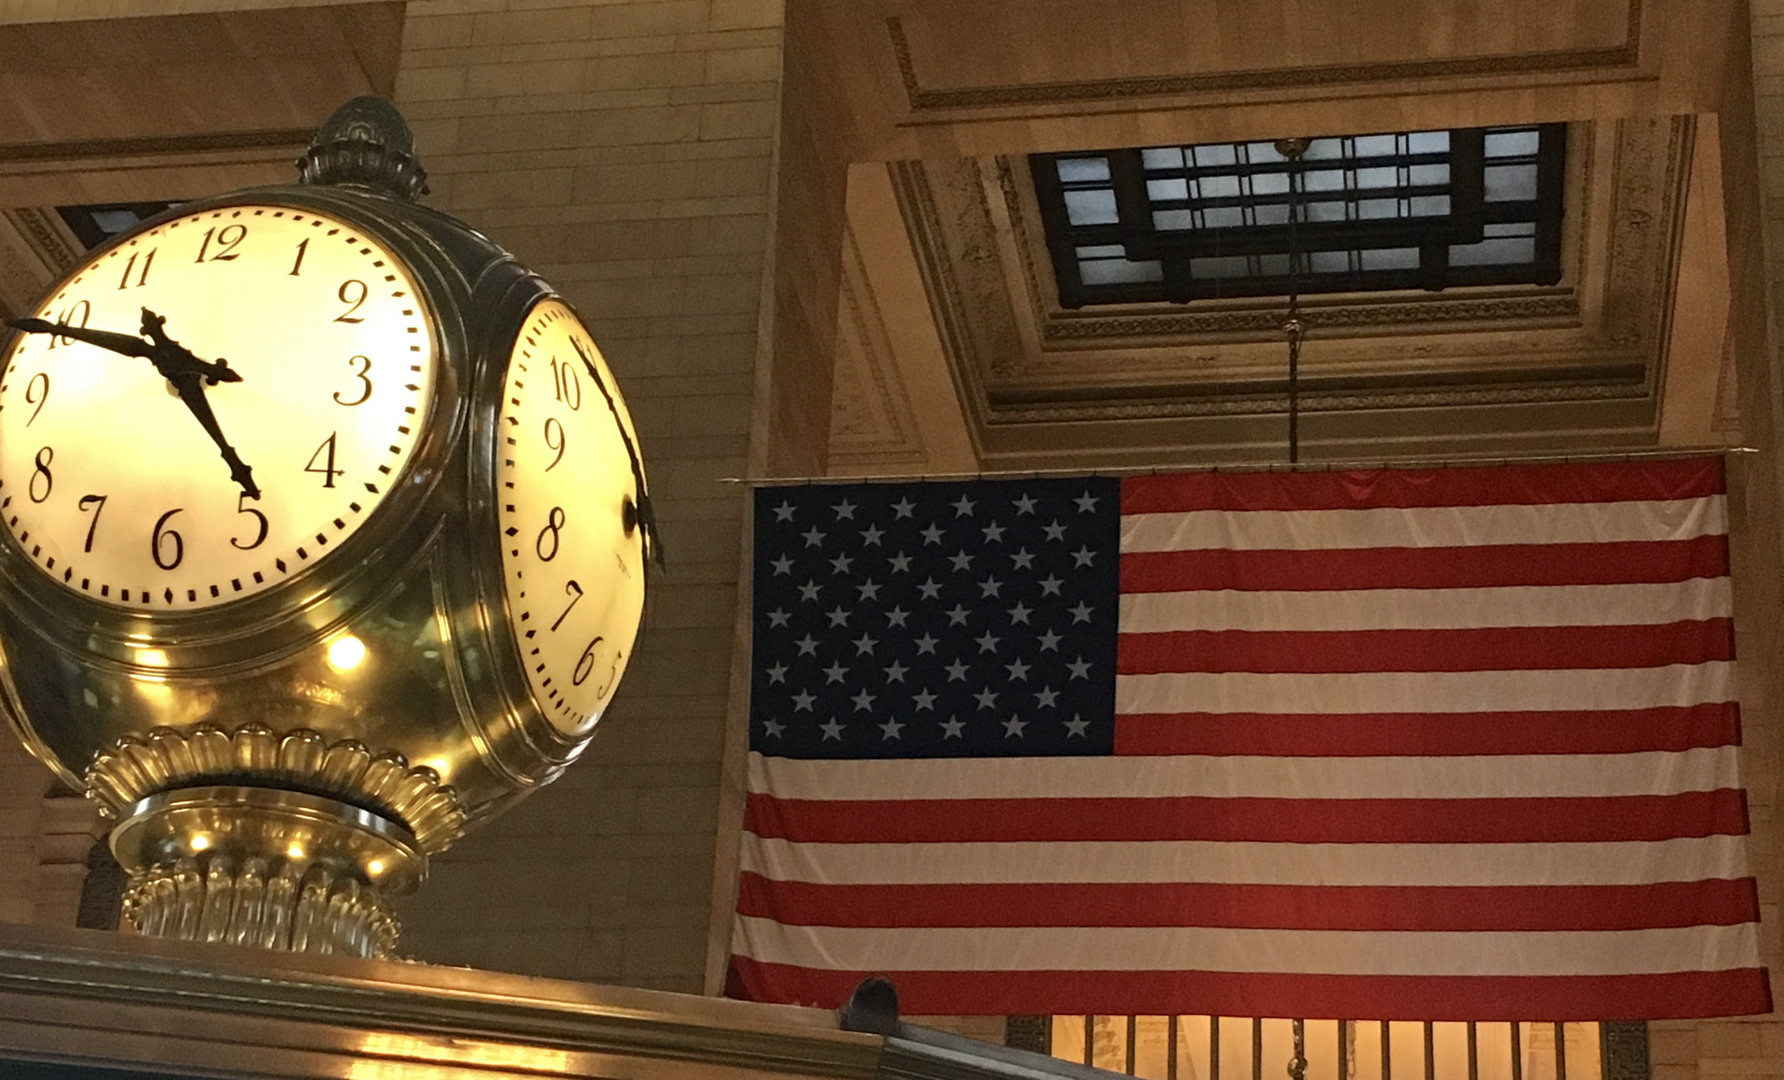 Grand Central Station....